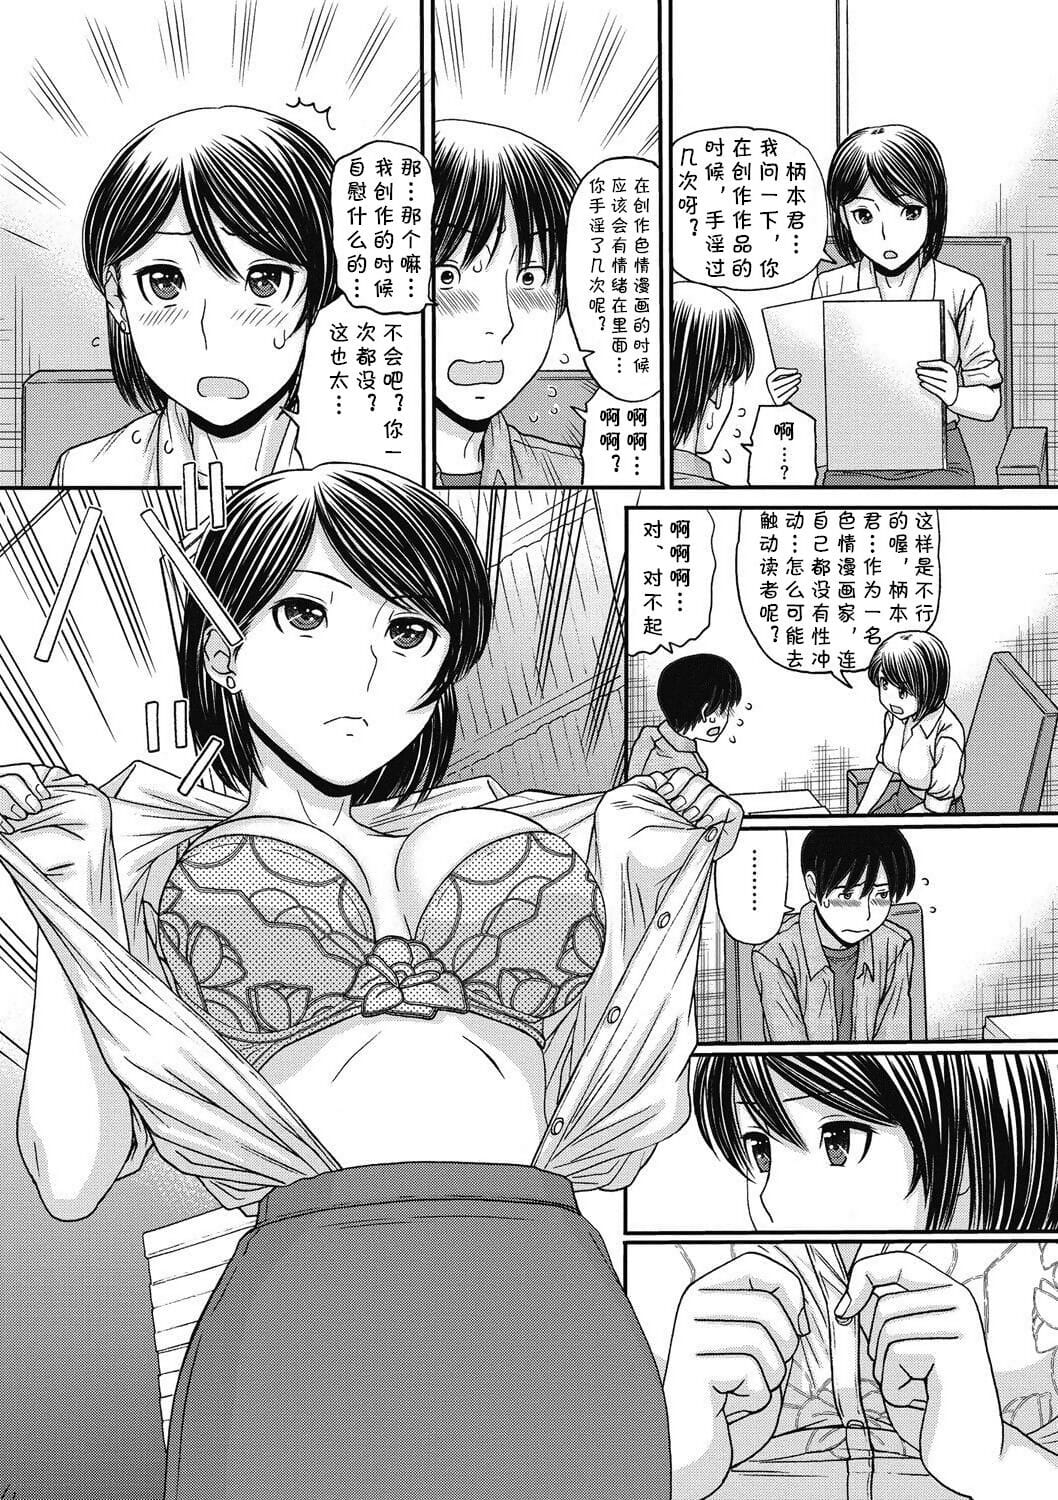 Hentai COMIC EDITOR page 1